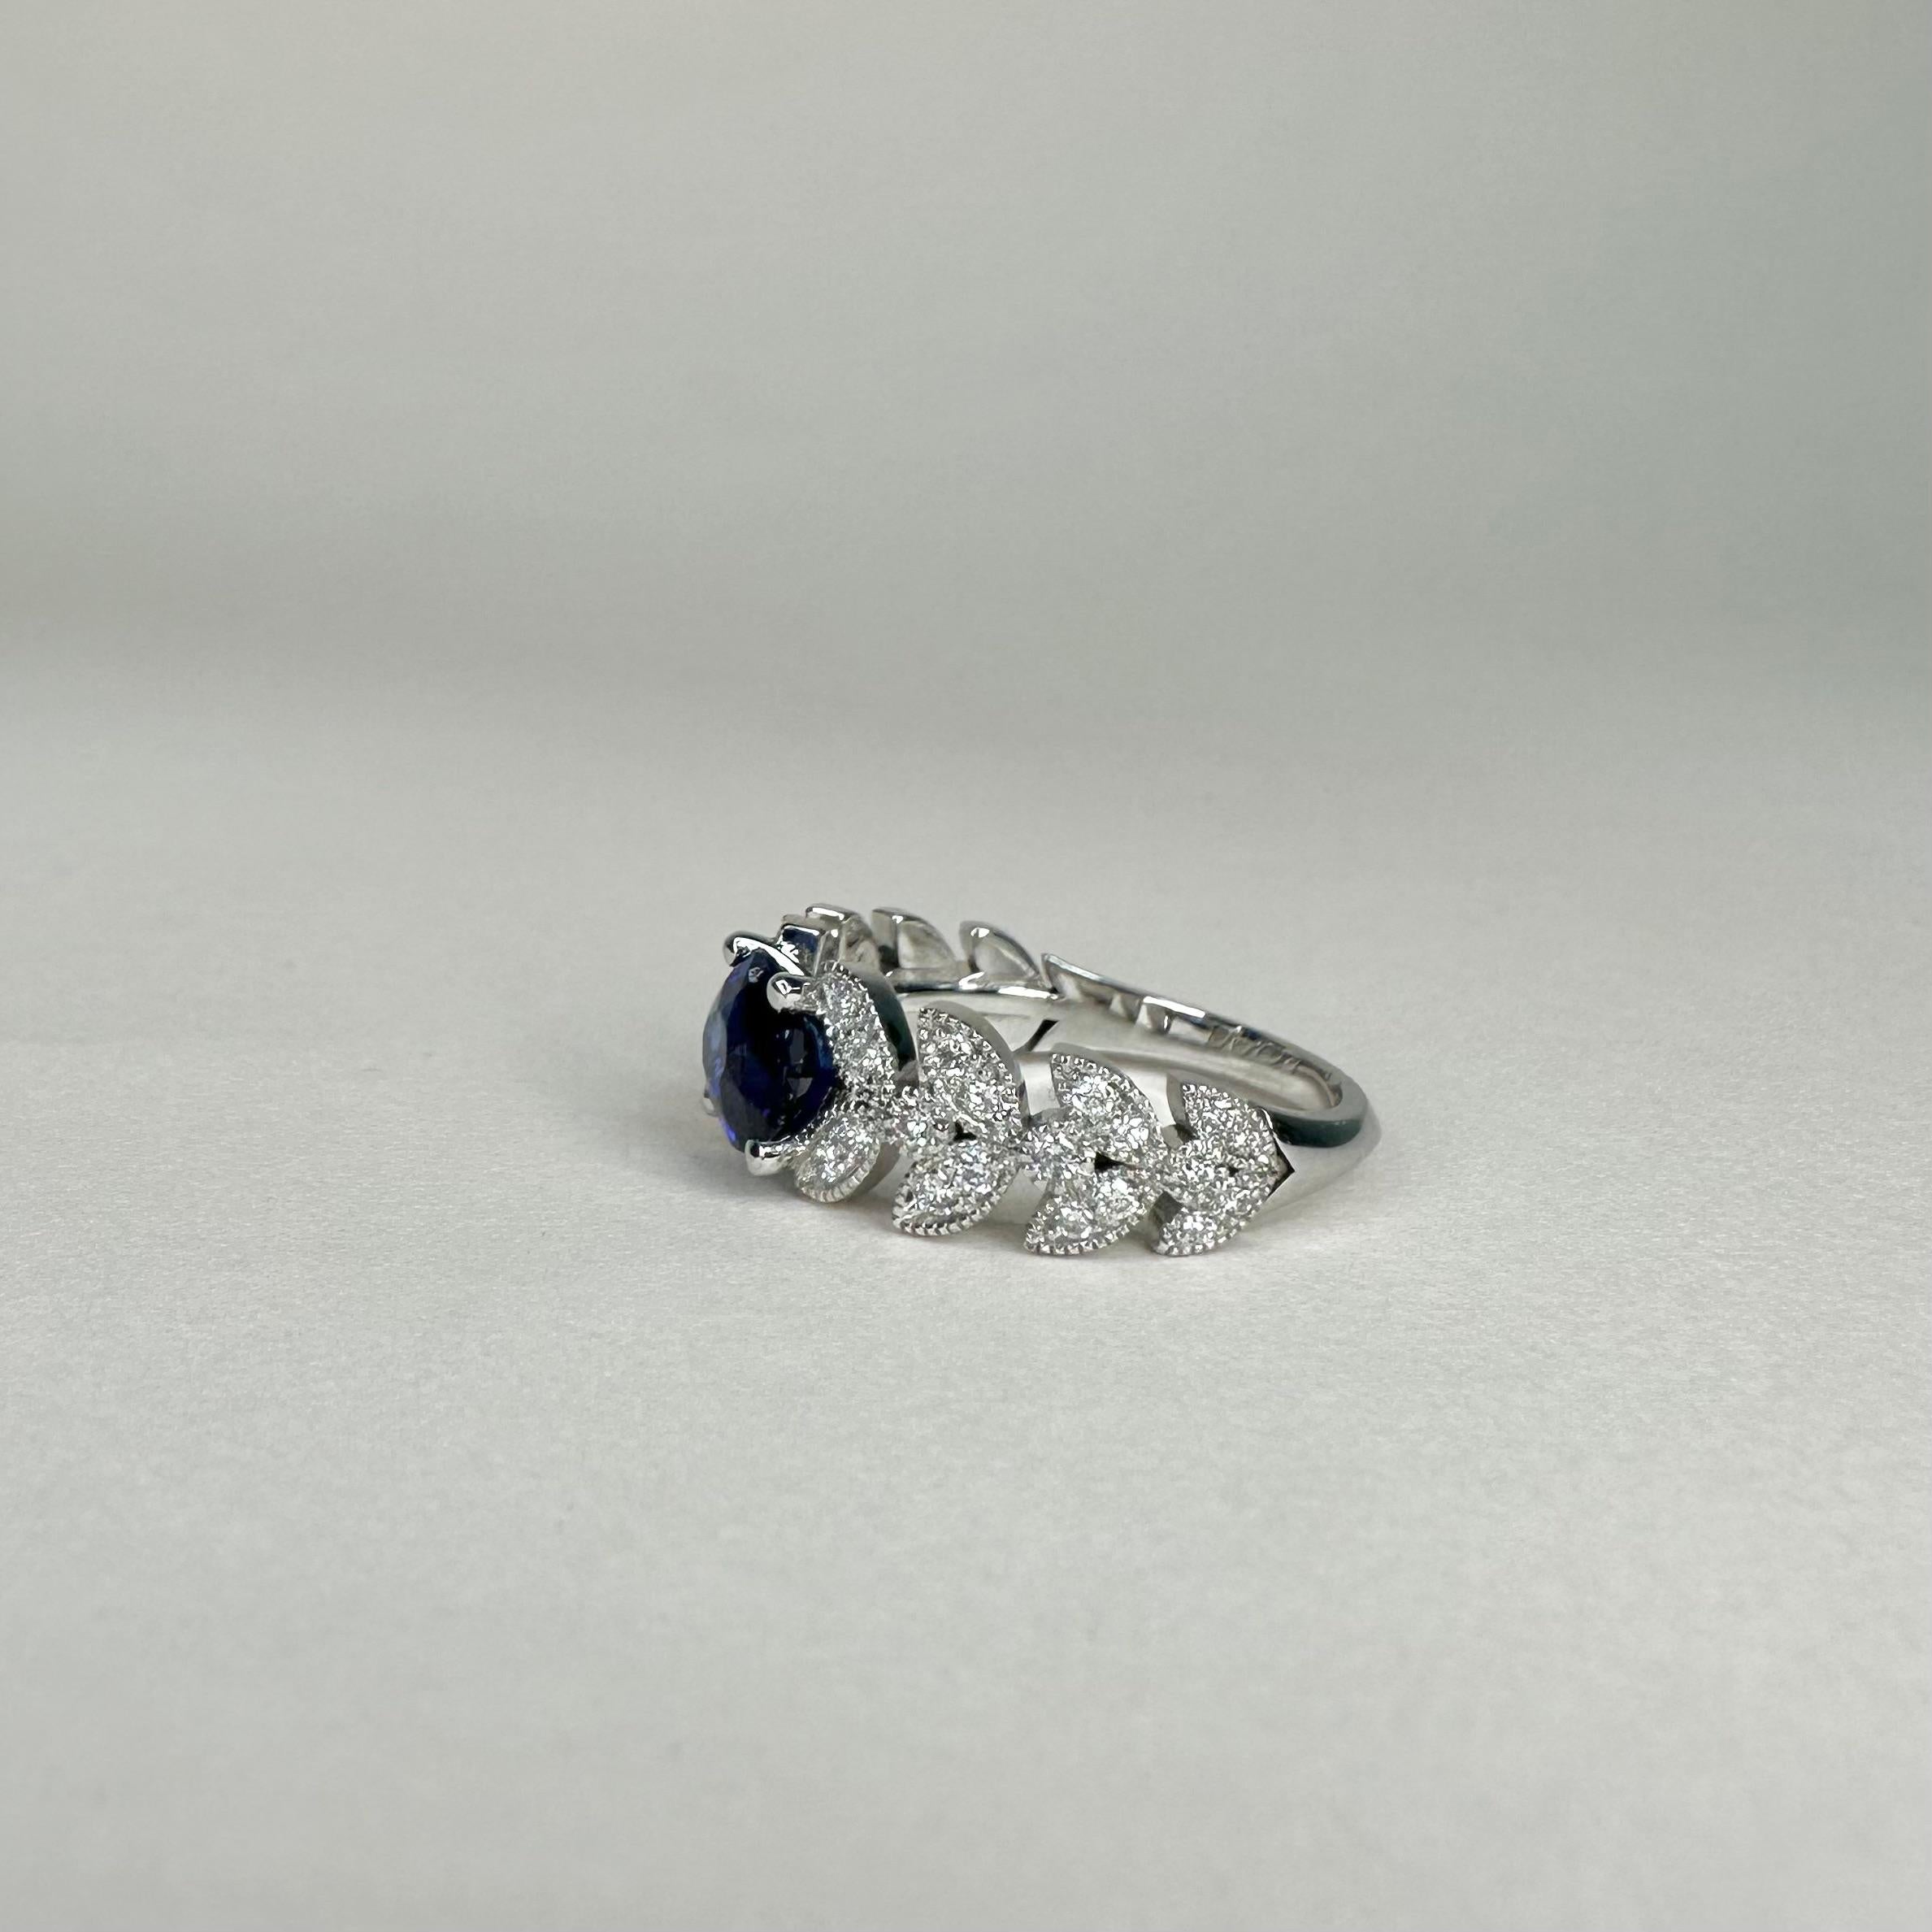 For Sale:  18k White Gold Laurel Leaf Design Ring Set with 1.53 Ct Royal Blue Oval Sapphire 4